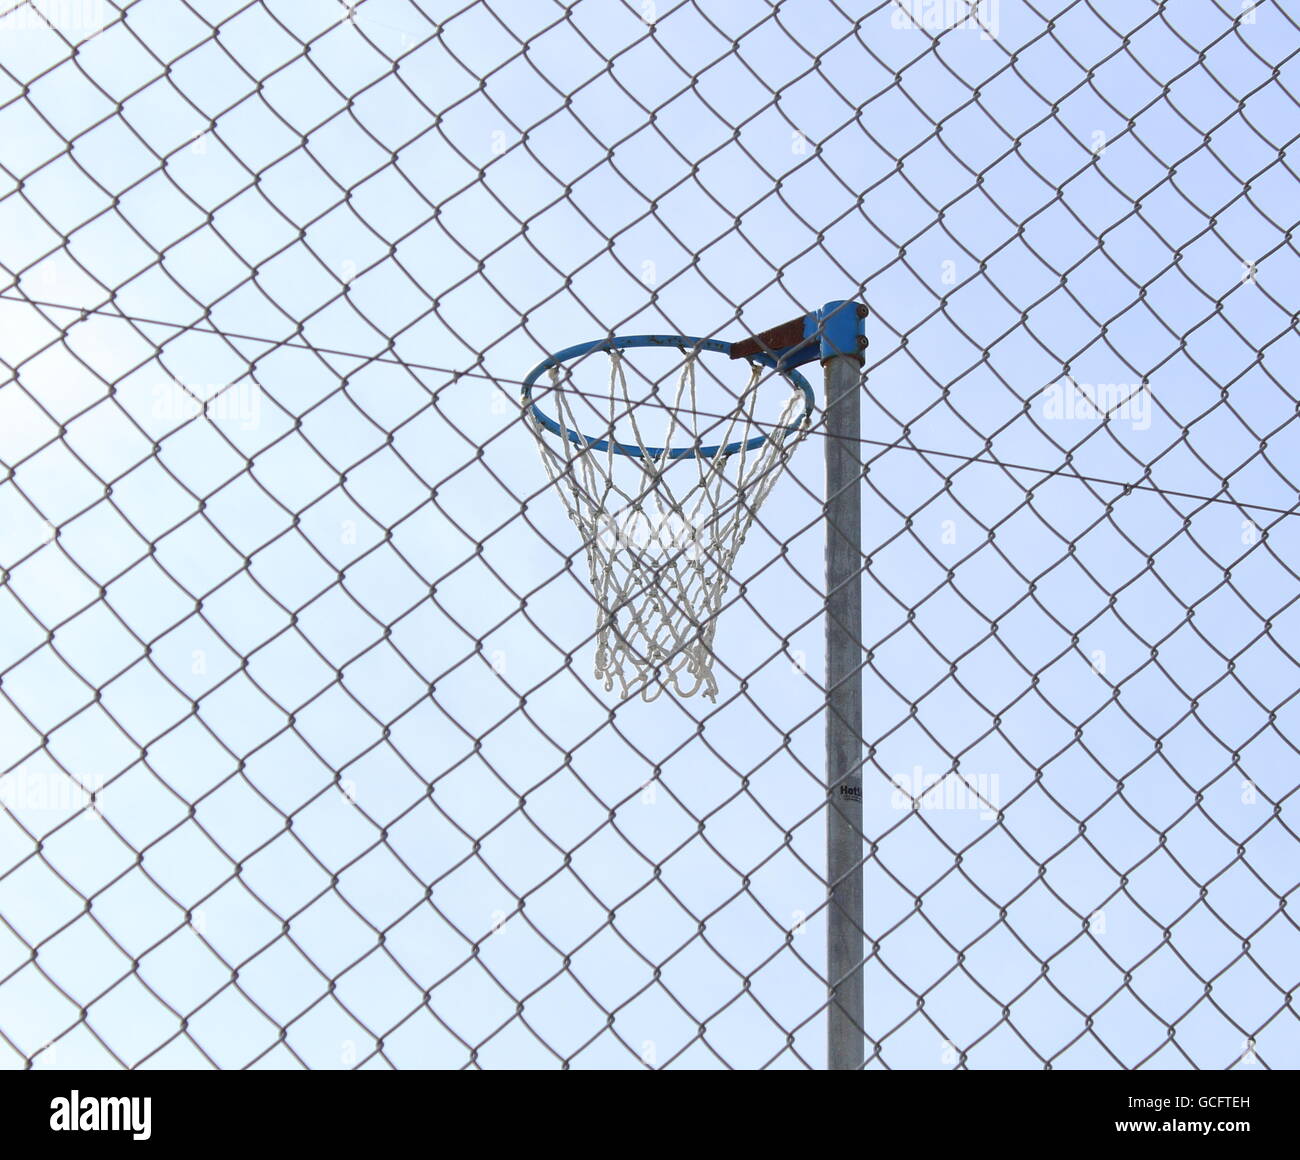 Netball ring inside fully fenced playground Stock Photo